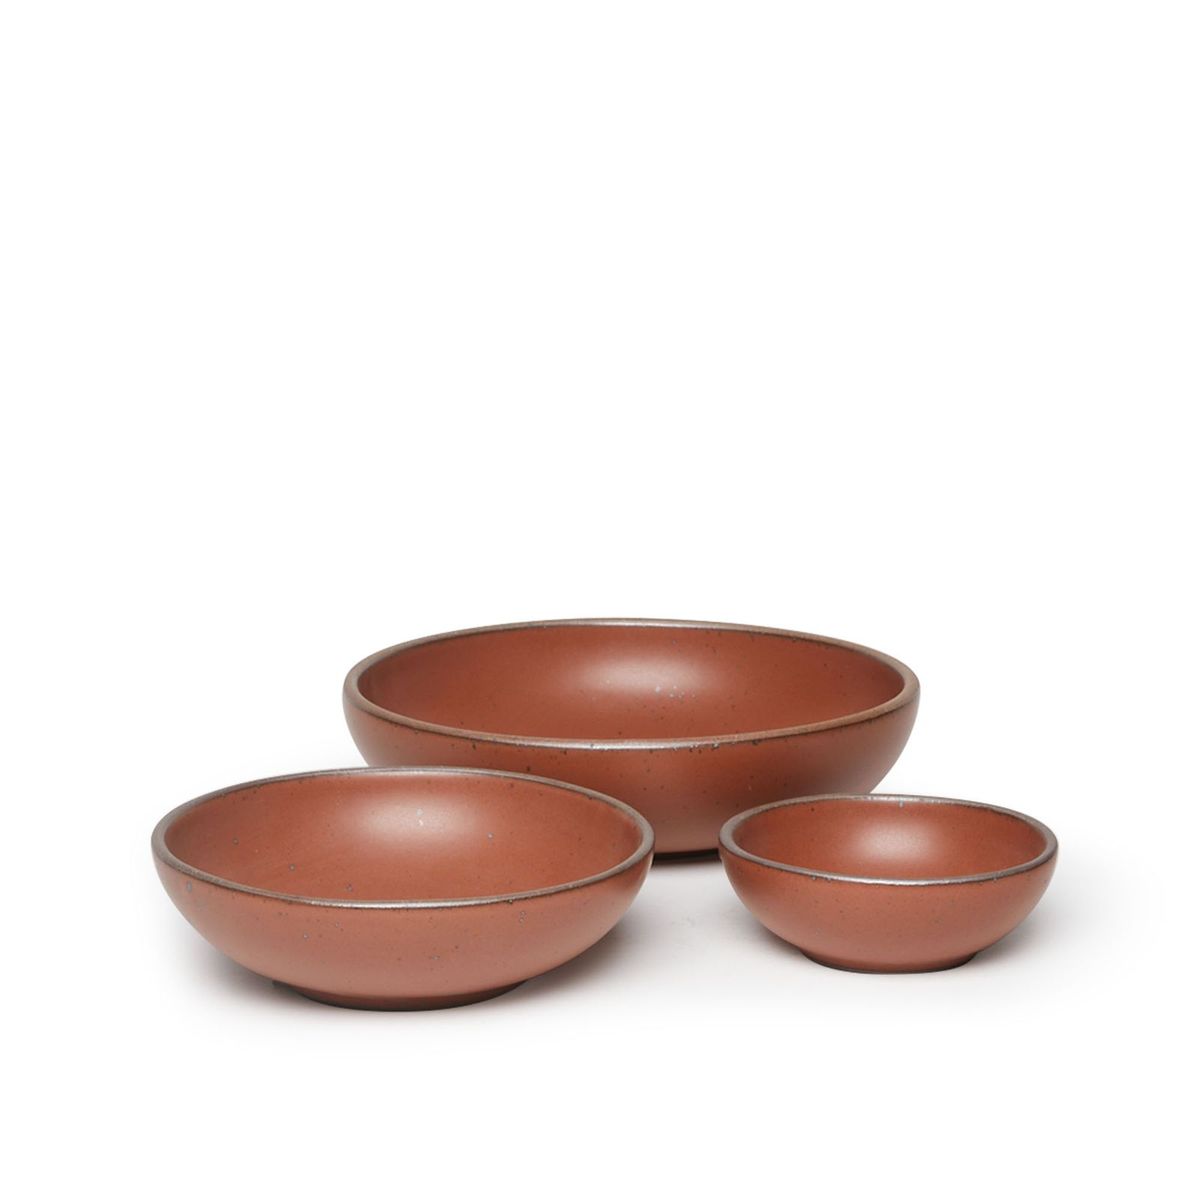 Shallow Bowl Nesting Set in Amaro